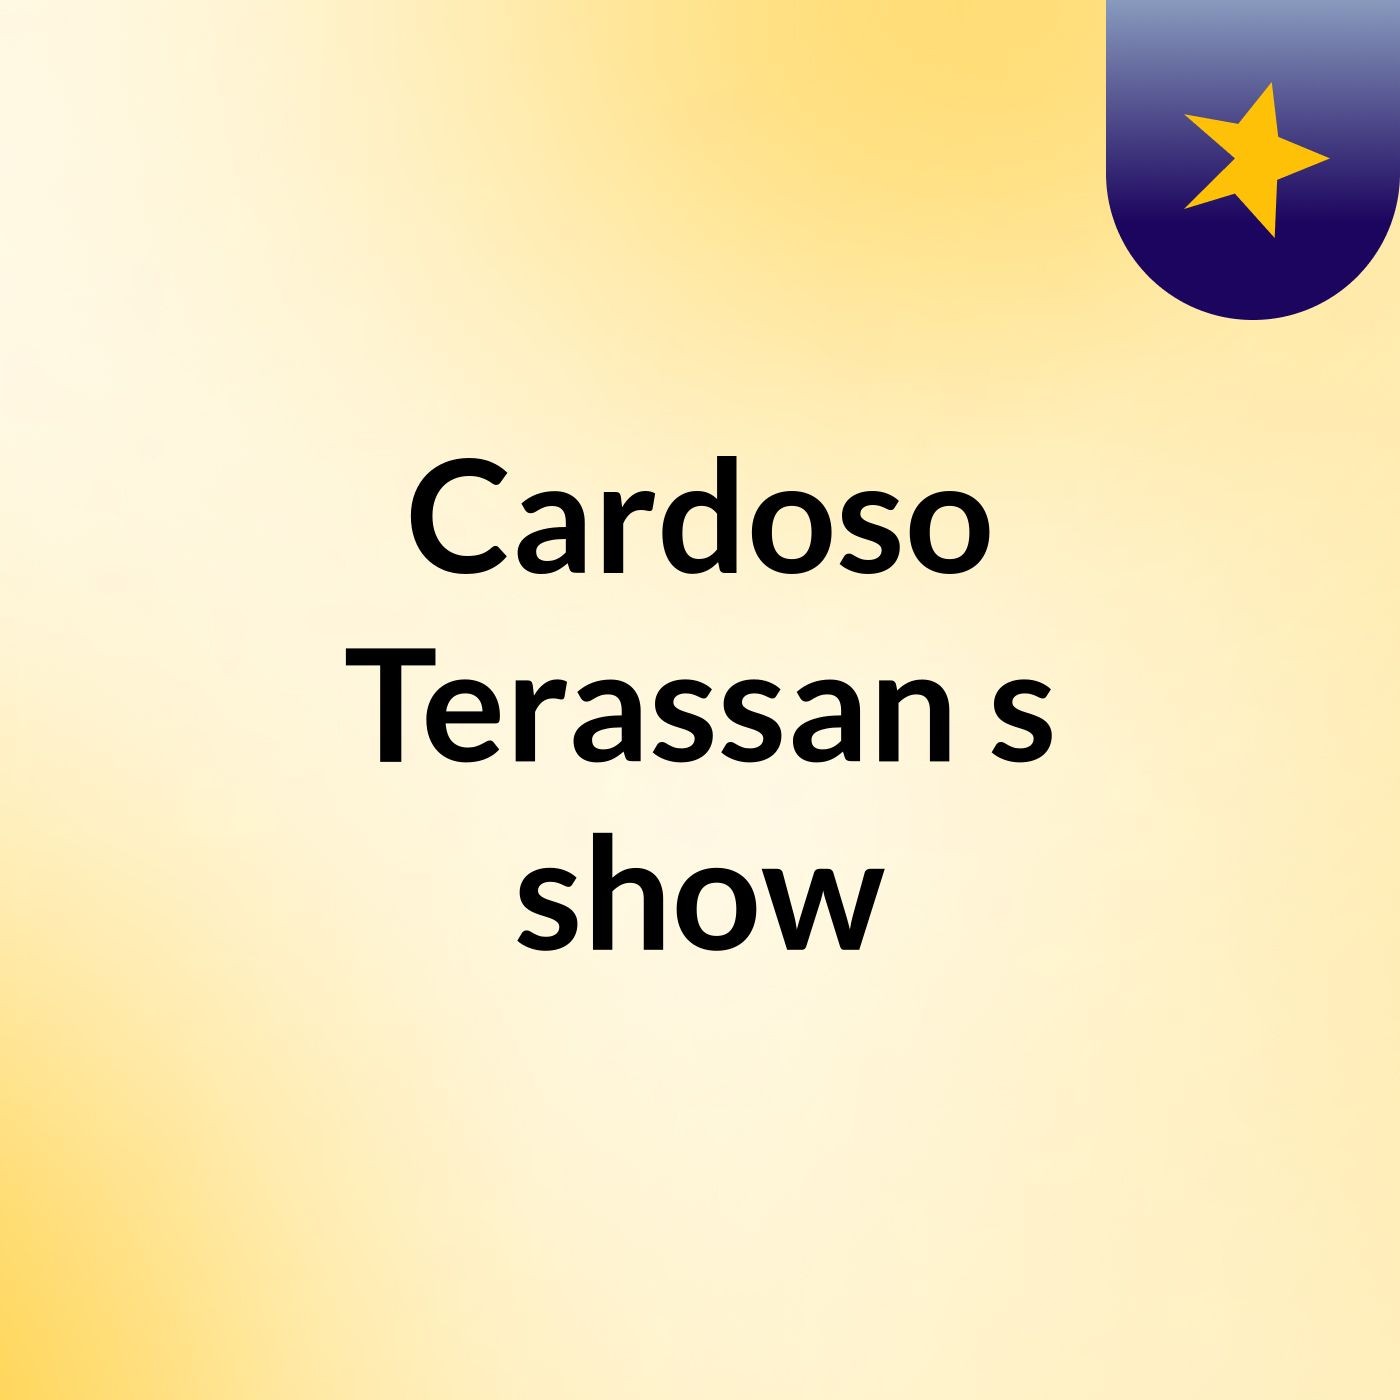 Cardoso Terassan's show